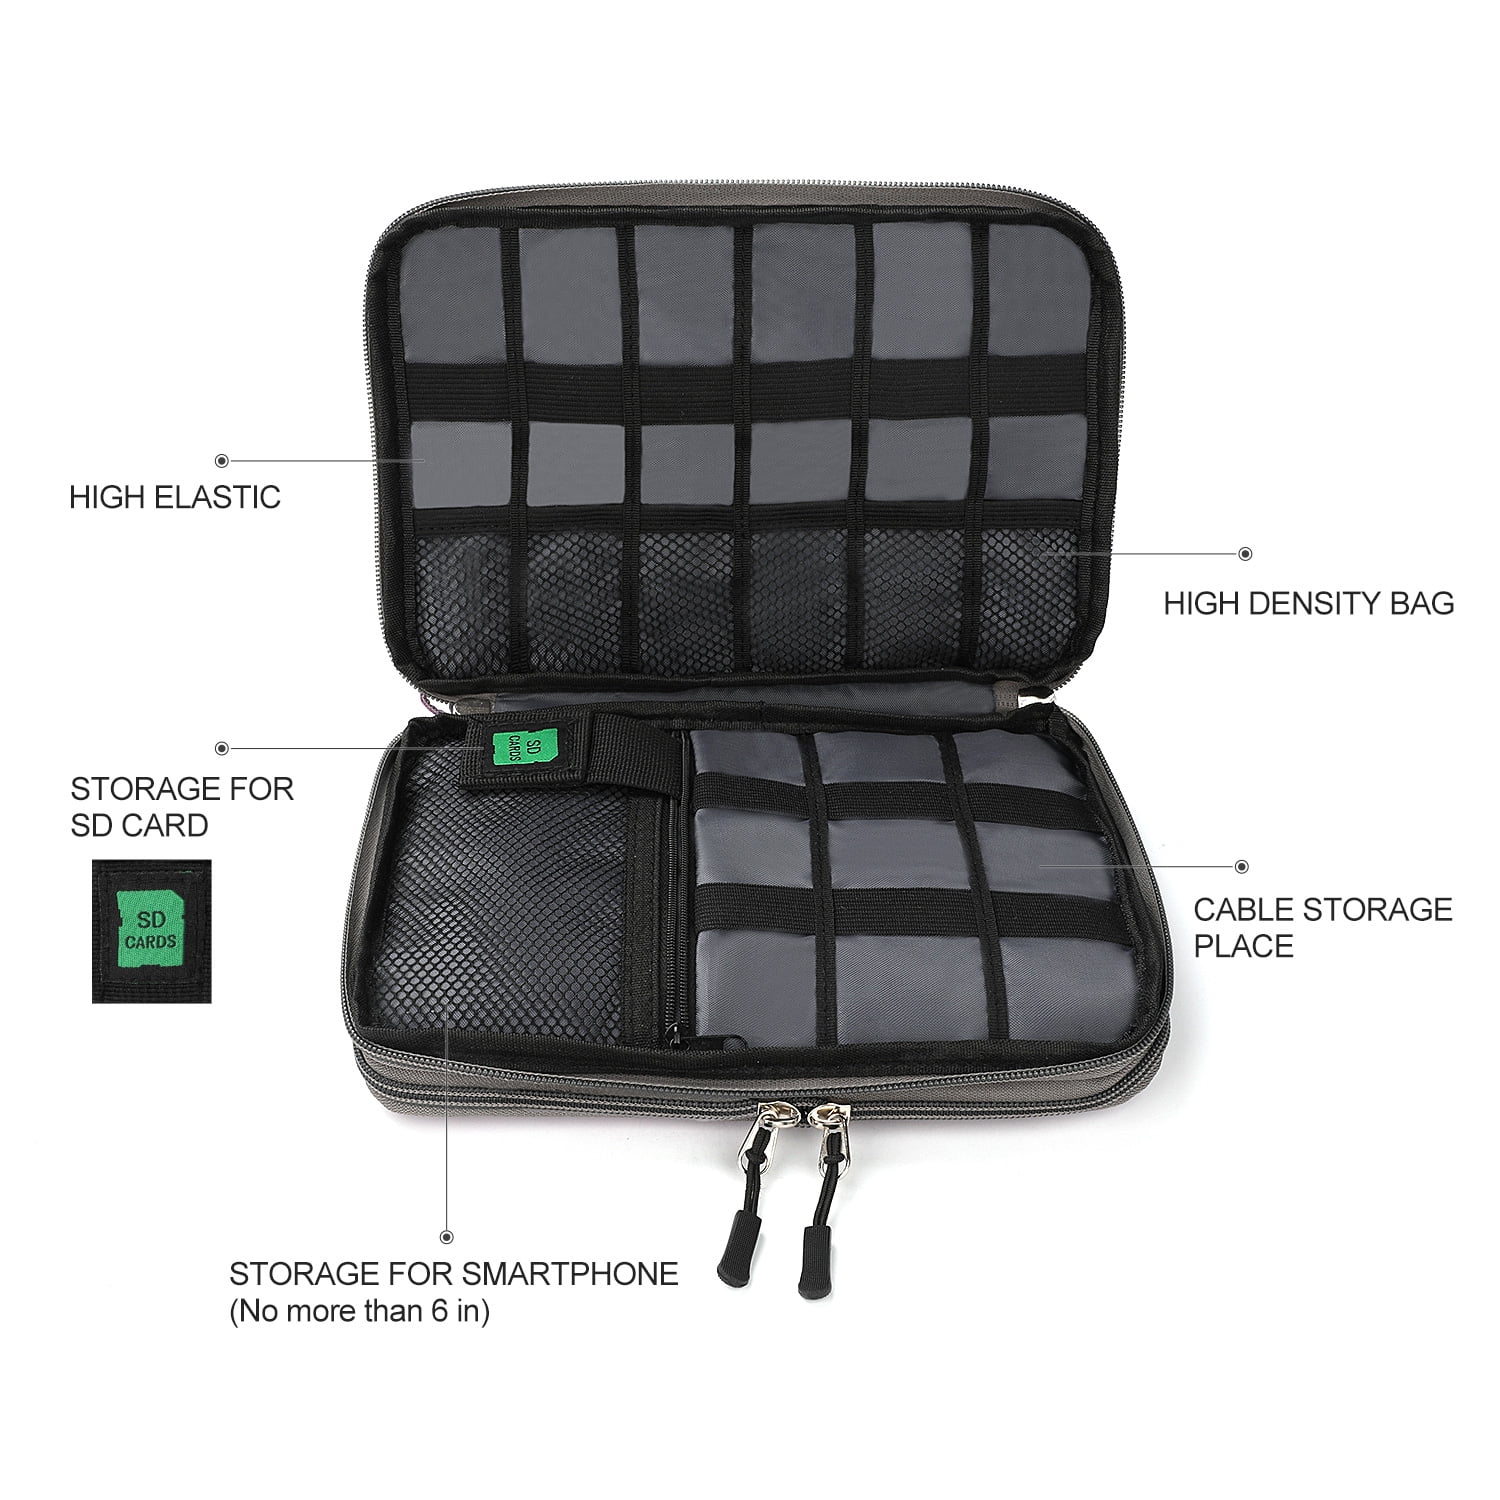 VIVEFOX Electronics Organizer, Compact Travel Organizer Bag